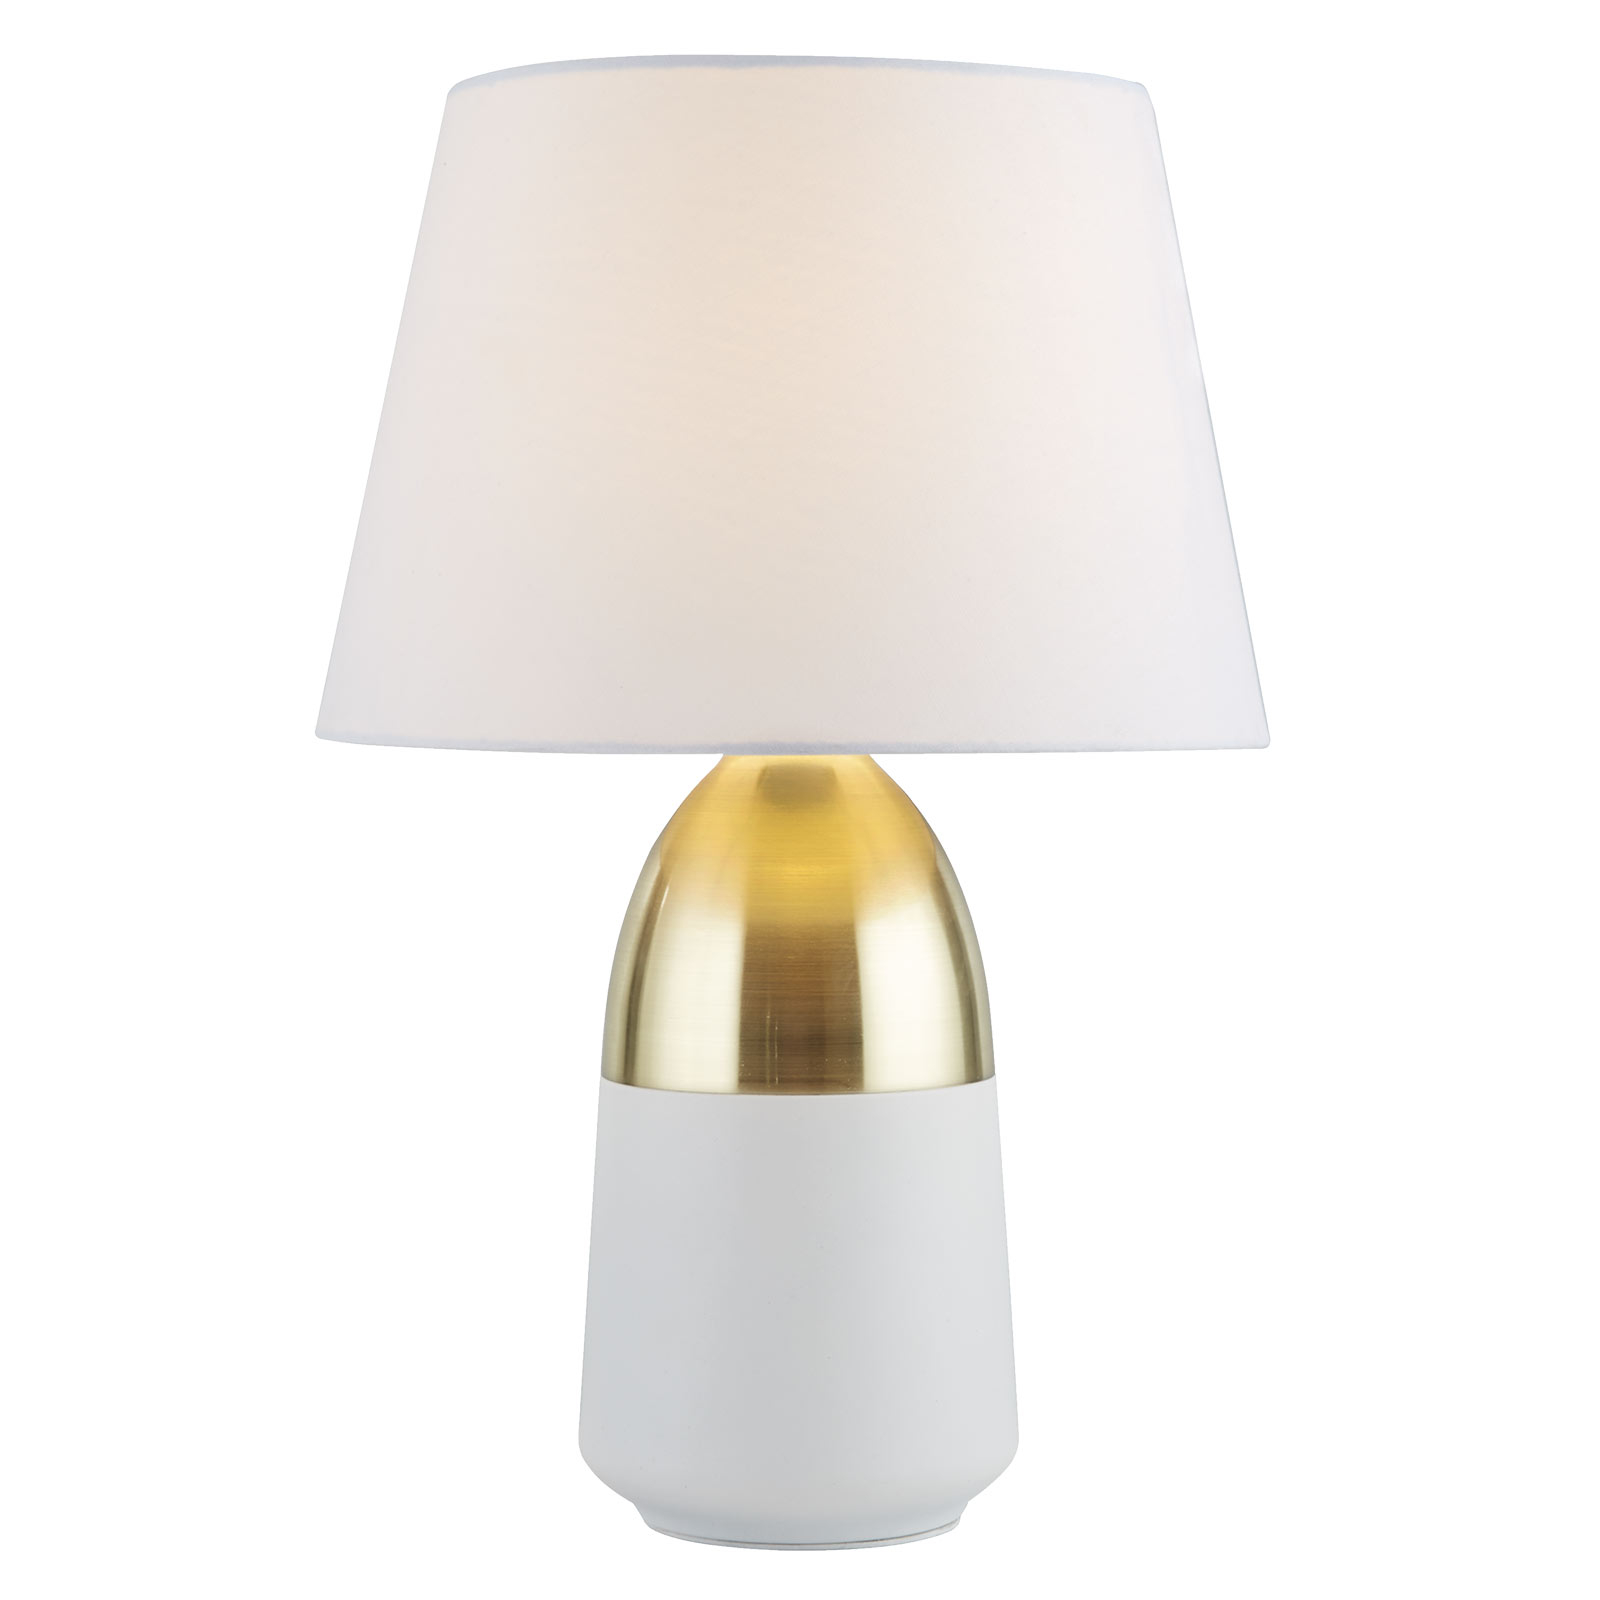 EU700340 table lamp in elegant white/brass